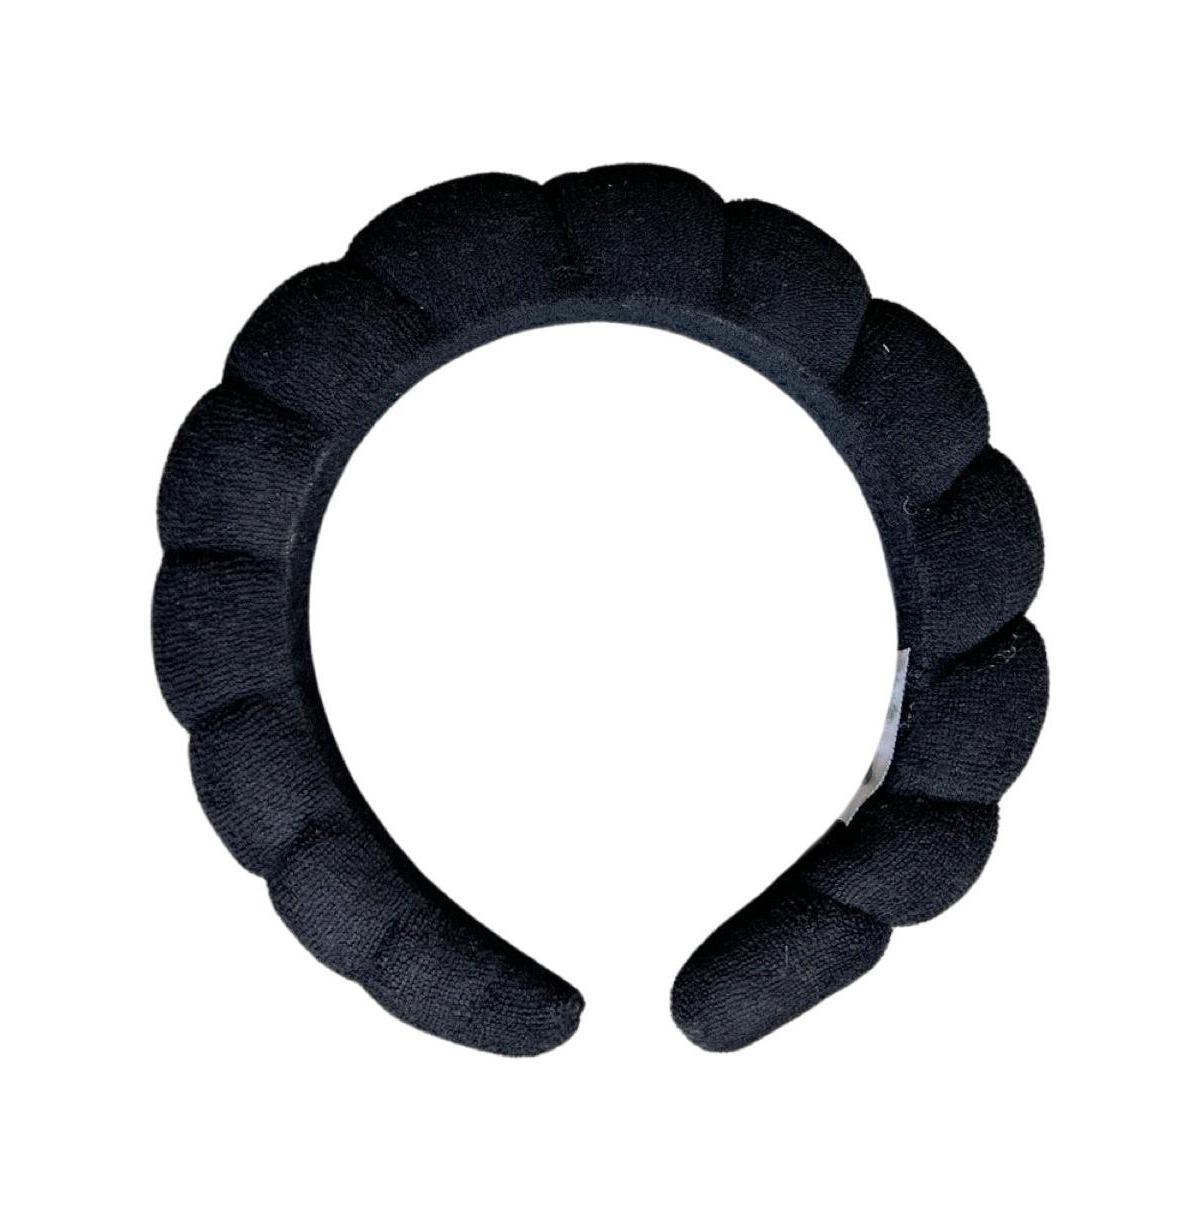 The Croissant Headband - Black - Black